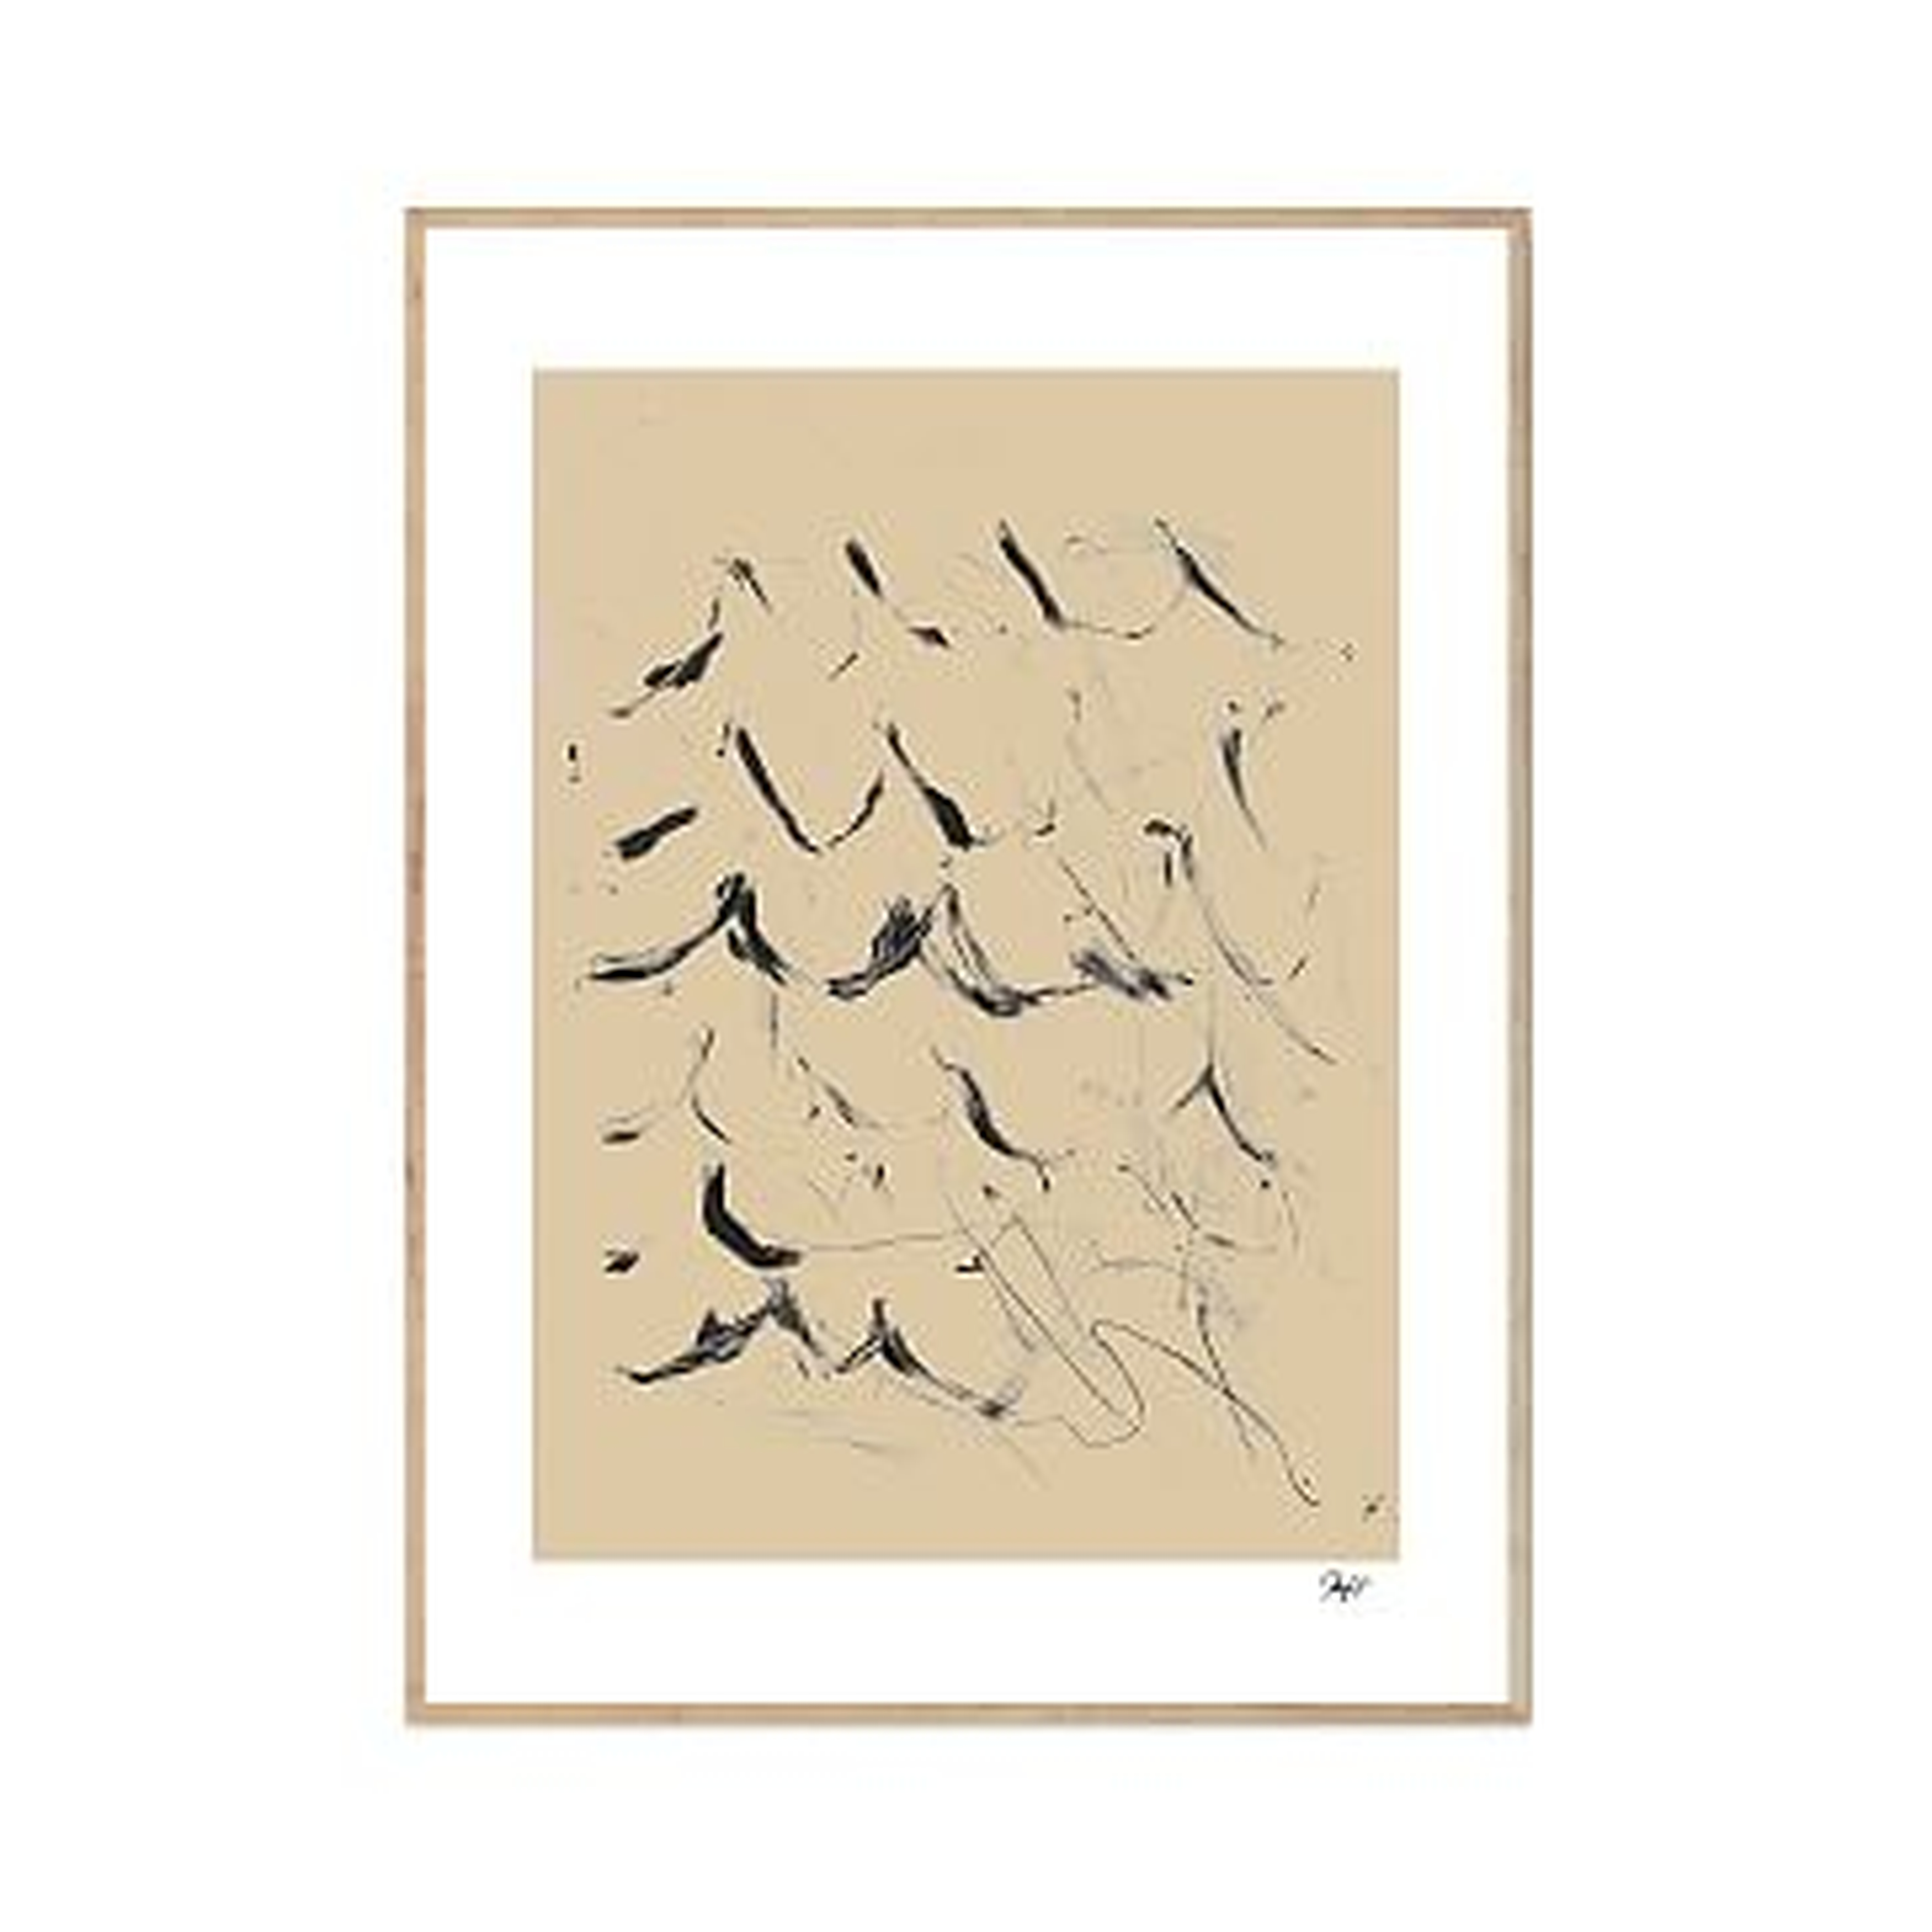 The Sea, Art Print By Johannes Geppert, 30X40Cm, Oak Frame - West Elm